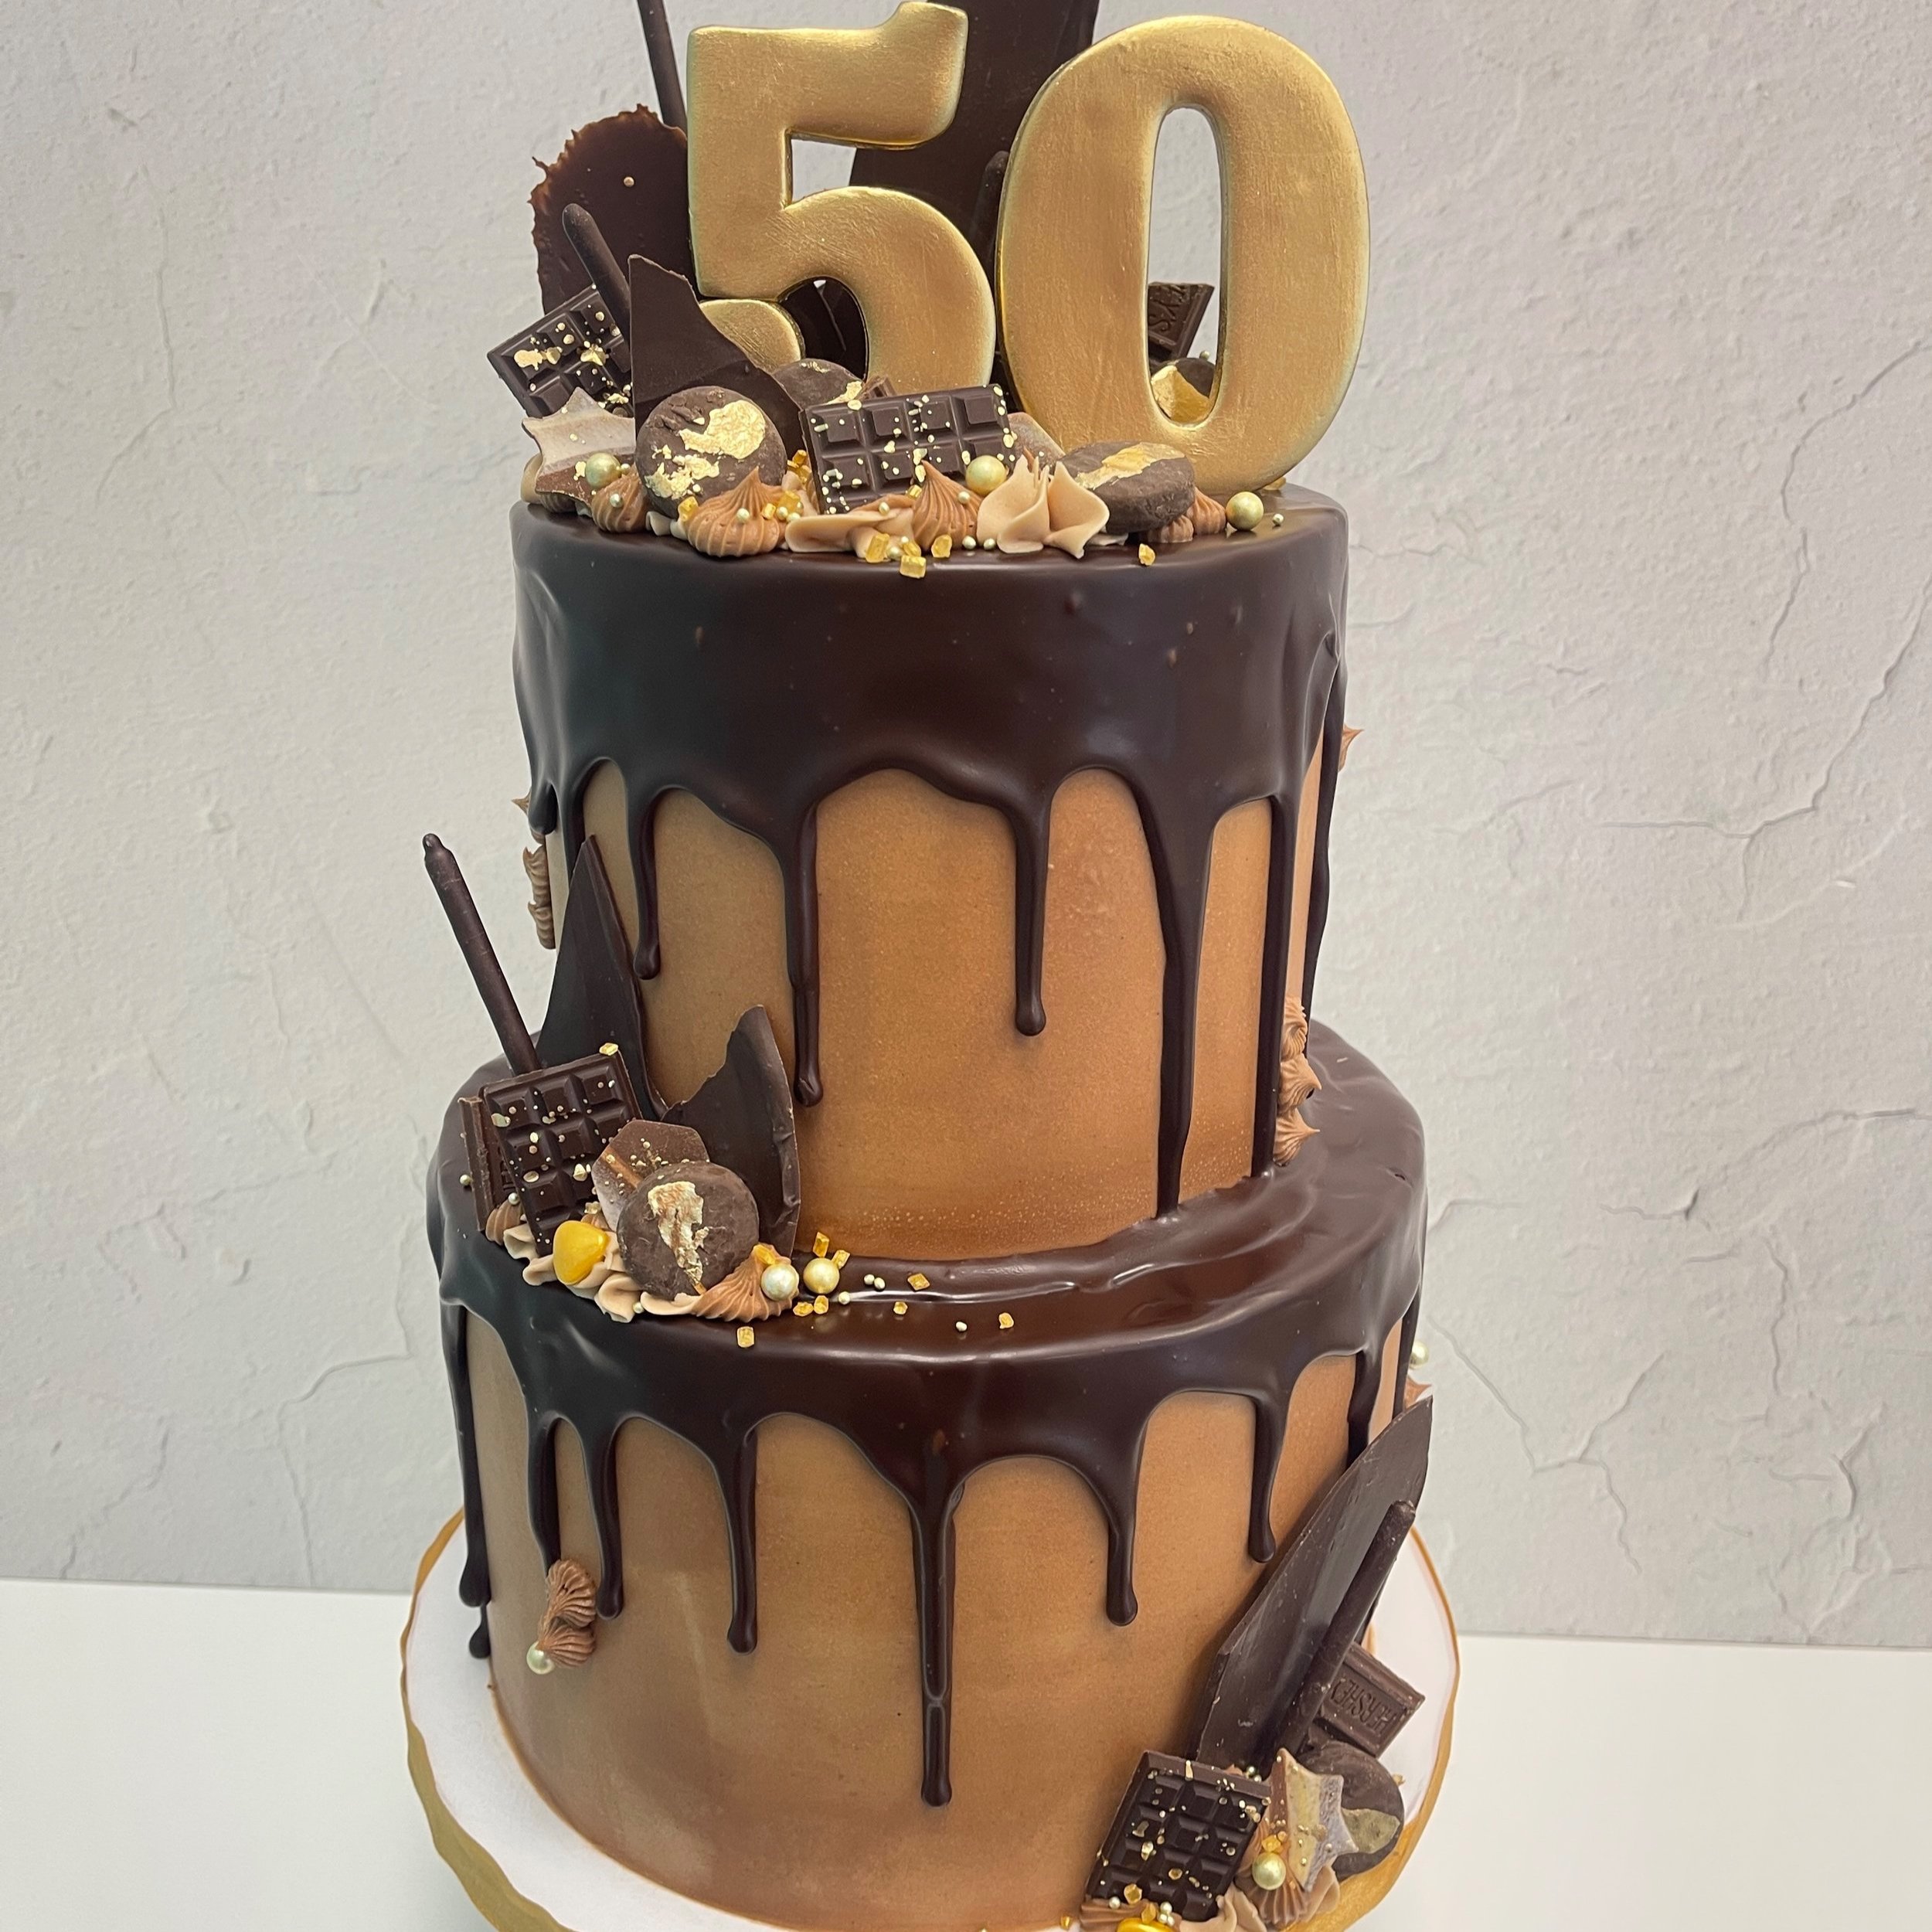 Celebration Cake Gallery — Baked in Nashville